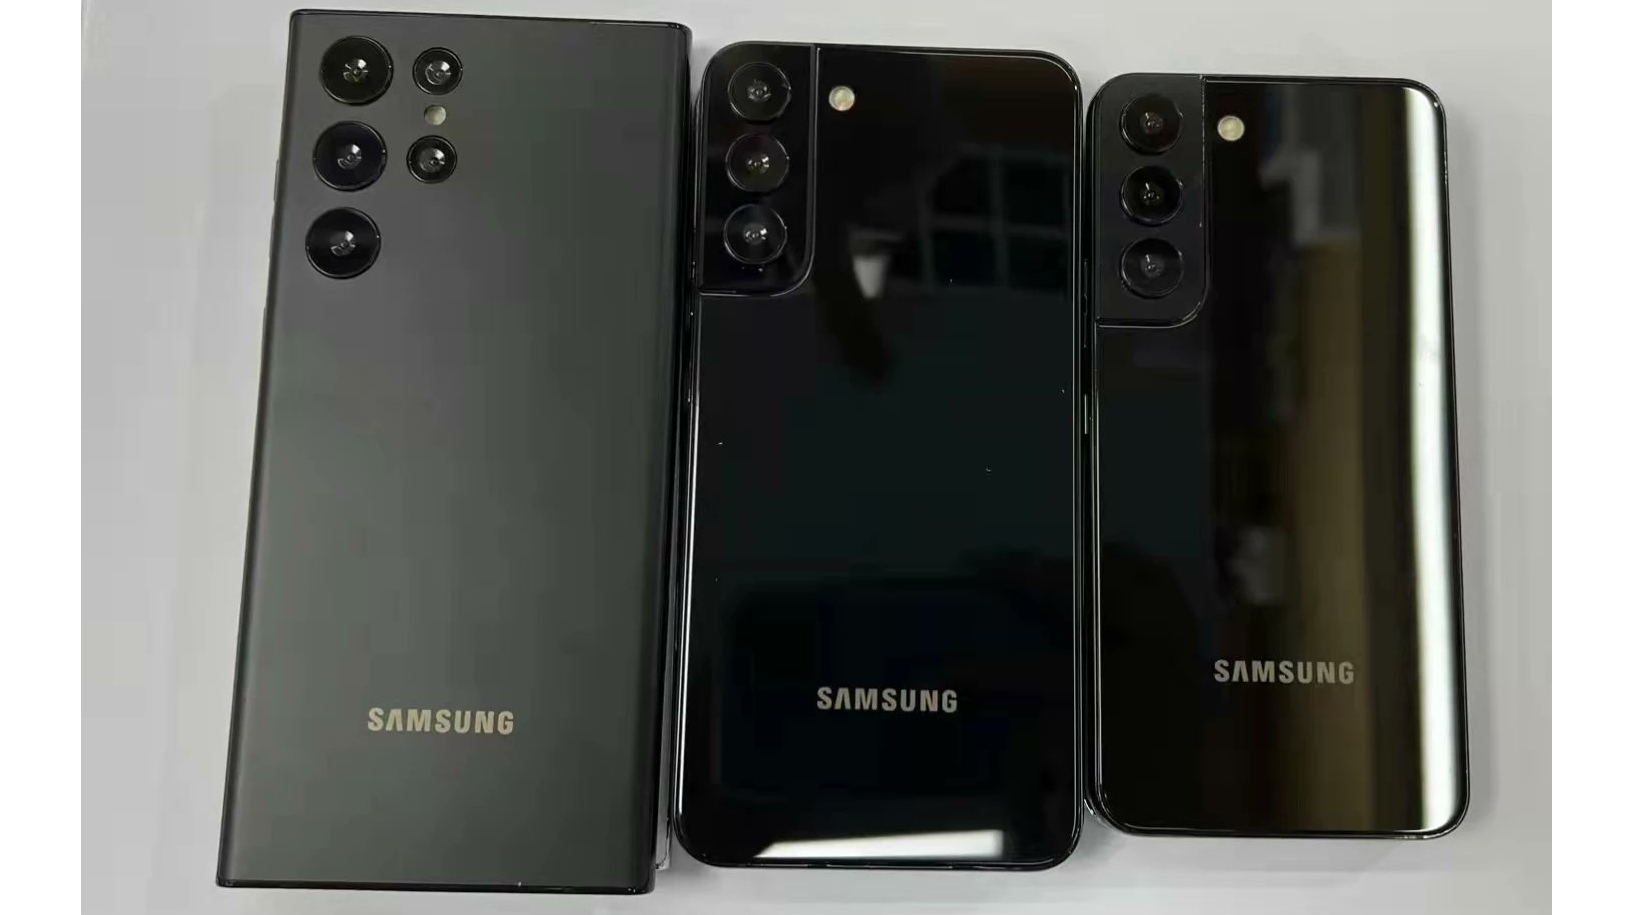 Bocoran foto menunjukkan jajaran Samsung Galaxy S22